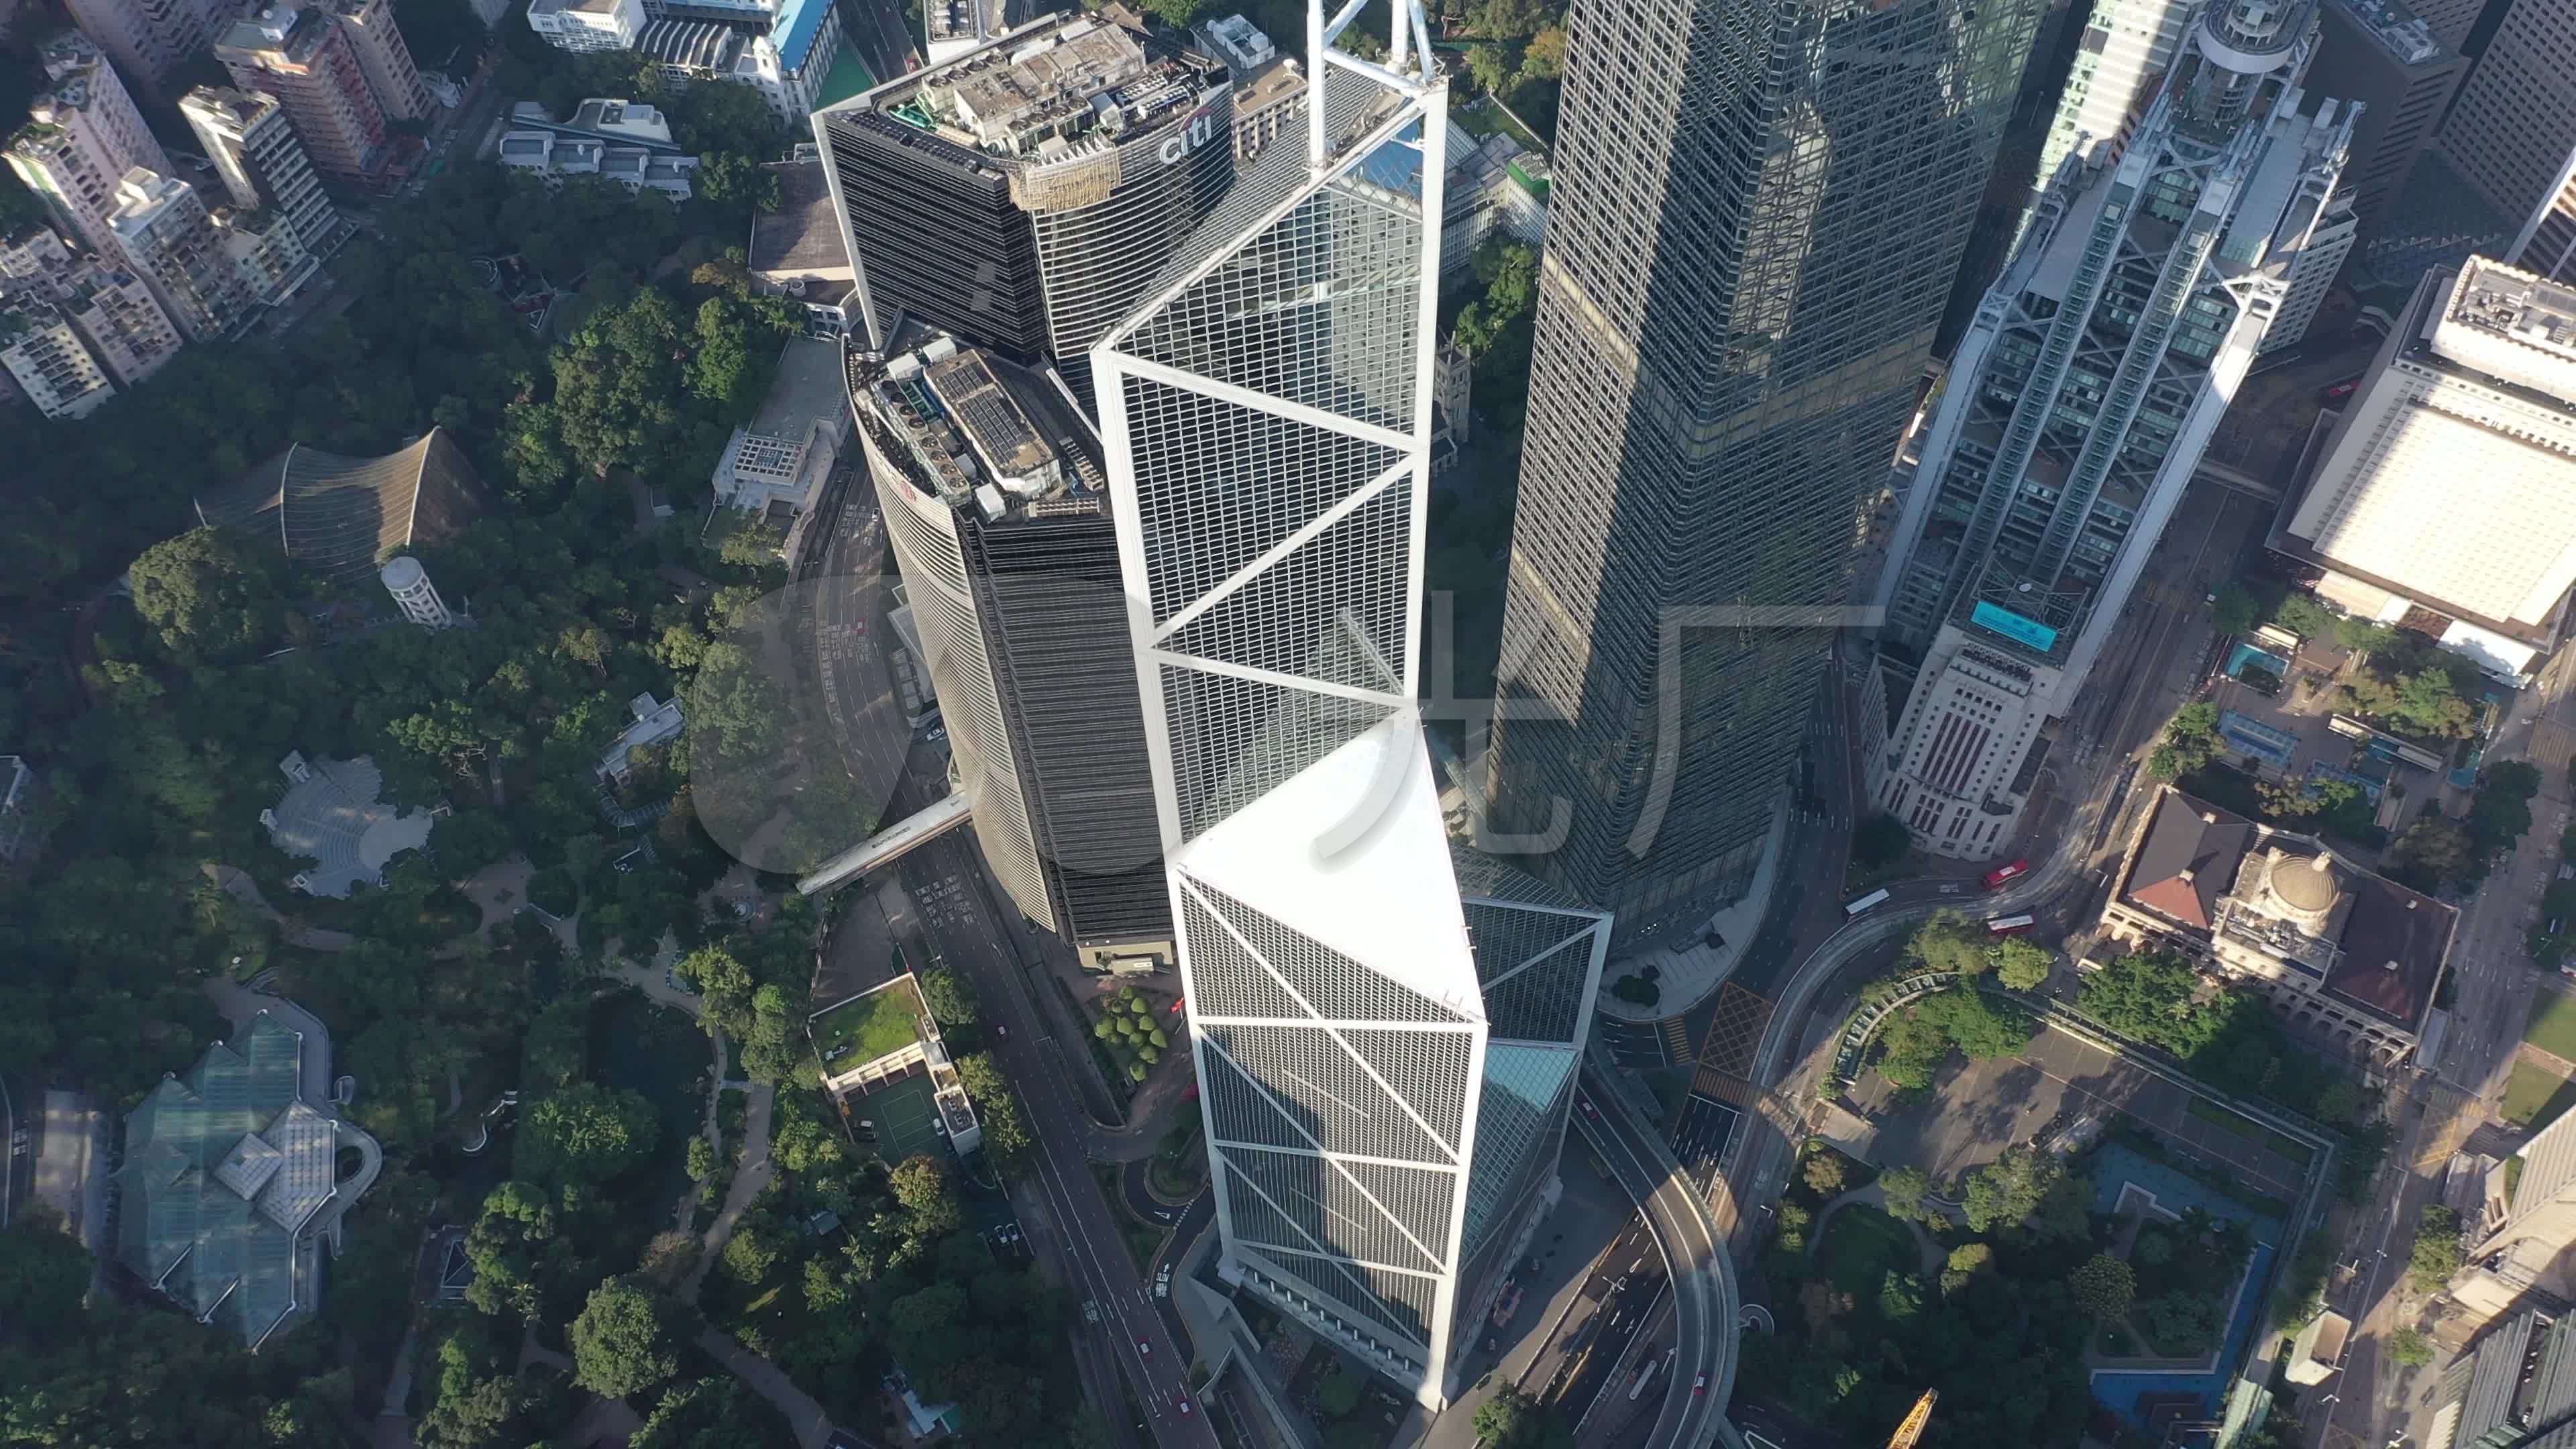 香港中银大厦（Bank of China Tower） - 贝聿铭（I.M. Pei） - 建筑设计案例 - 树状模式